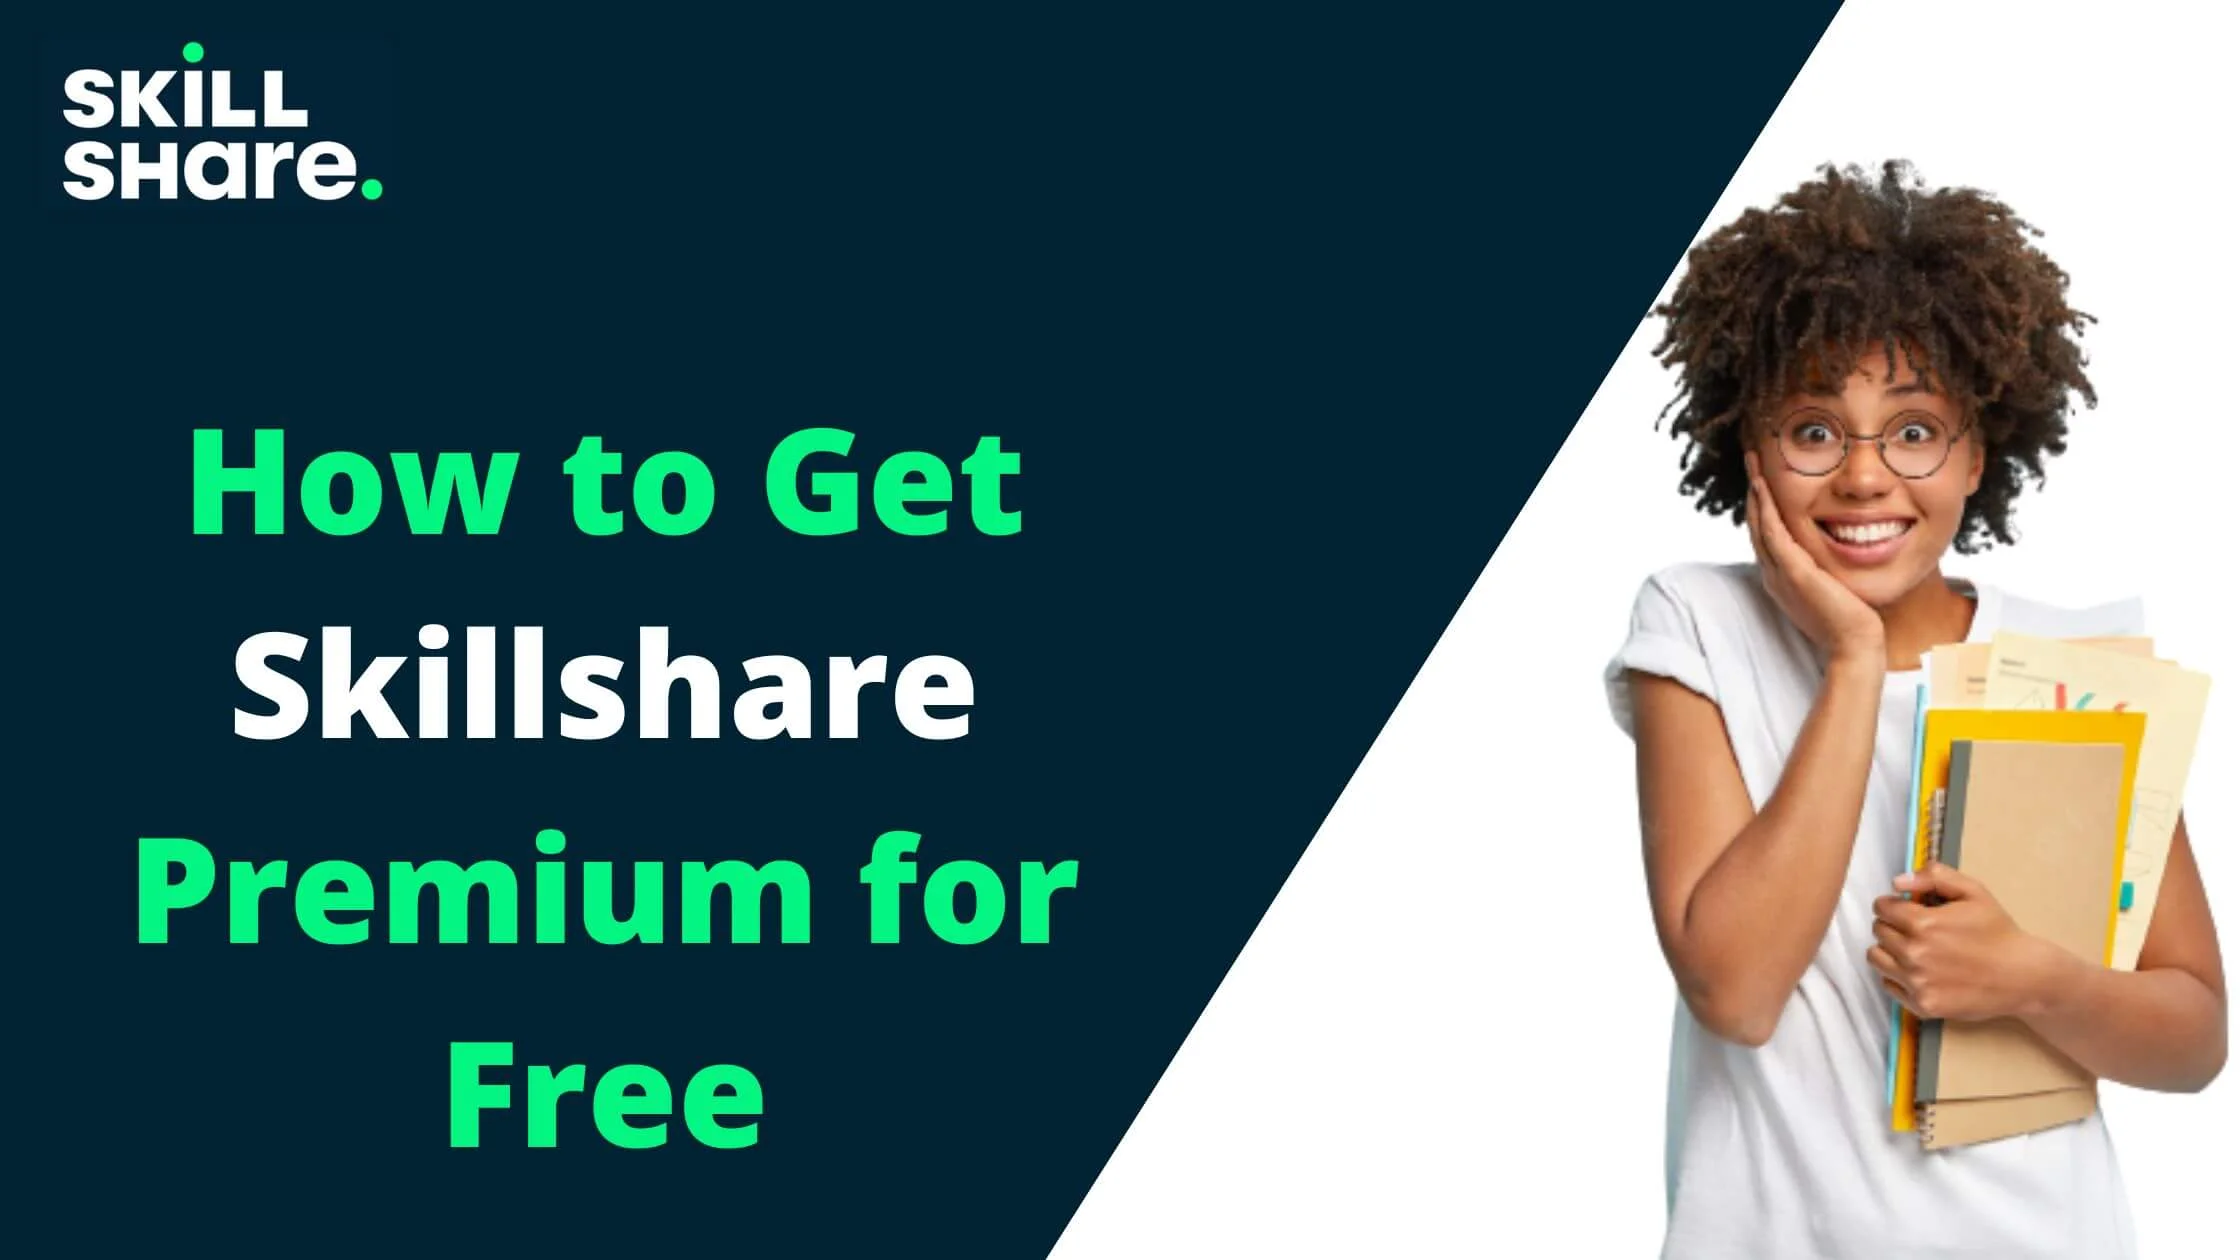 Skillshare Premium for Free